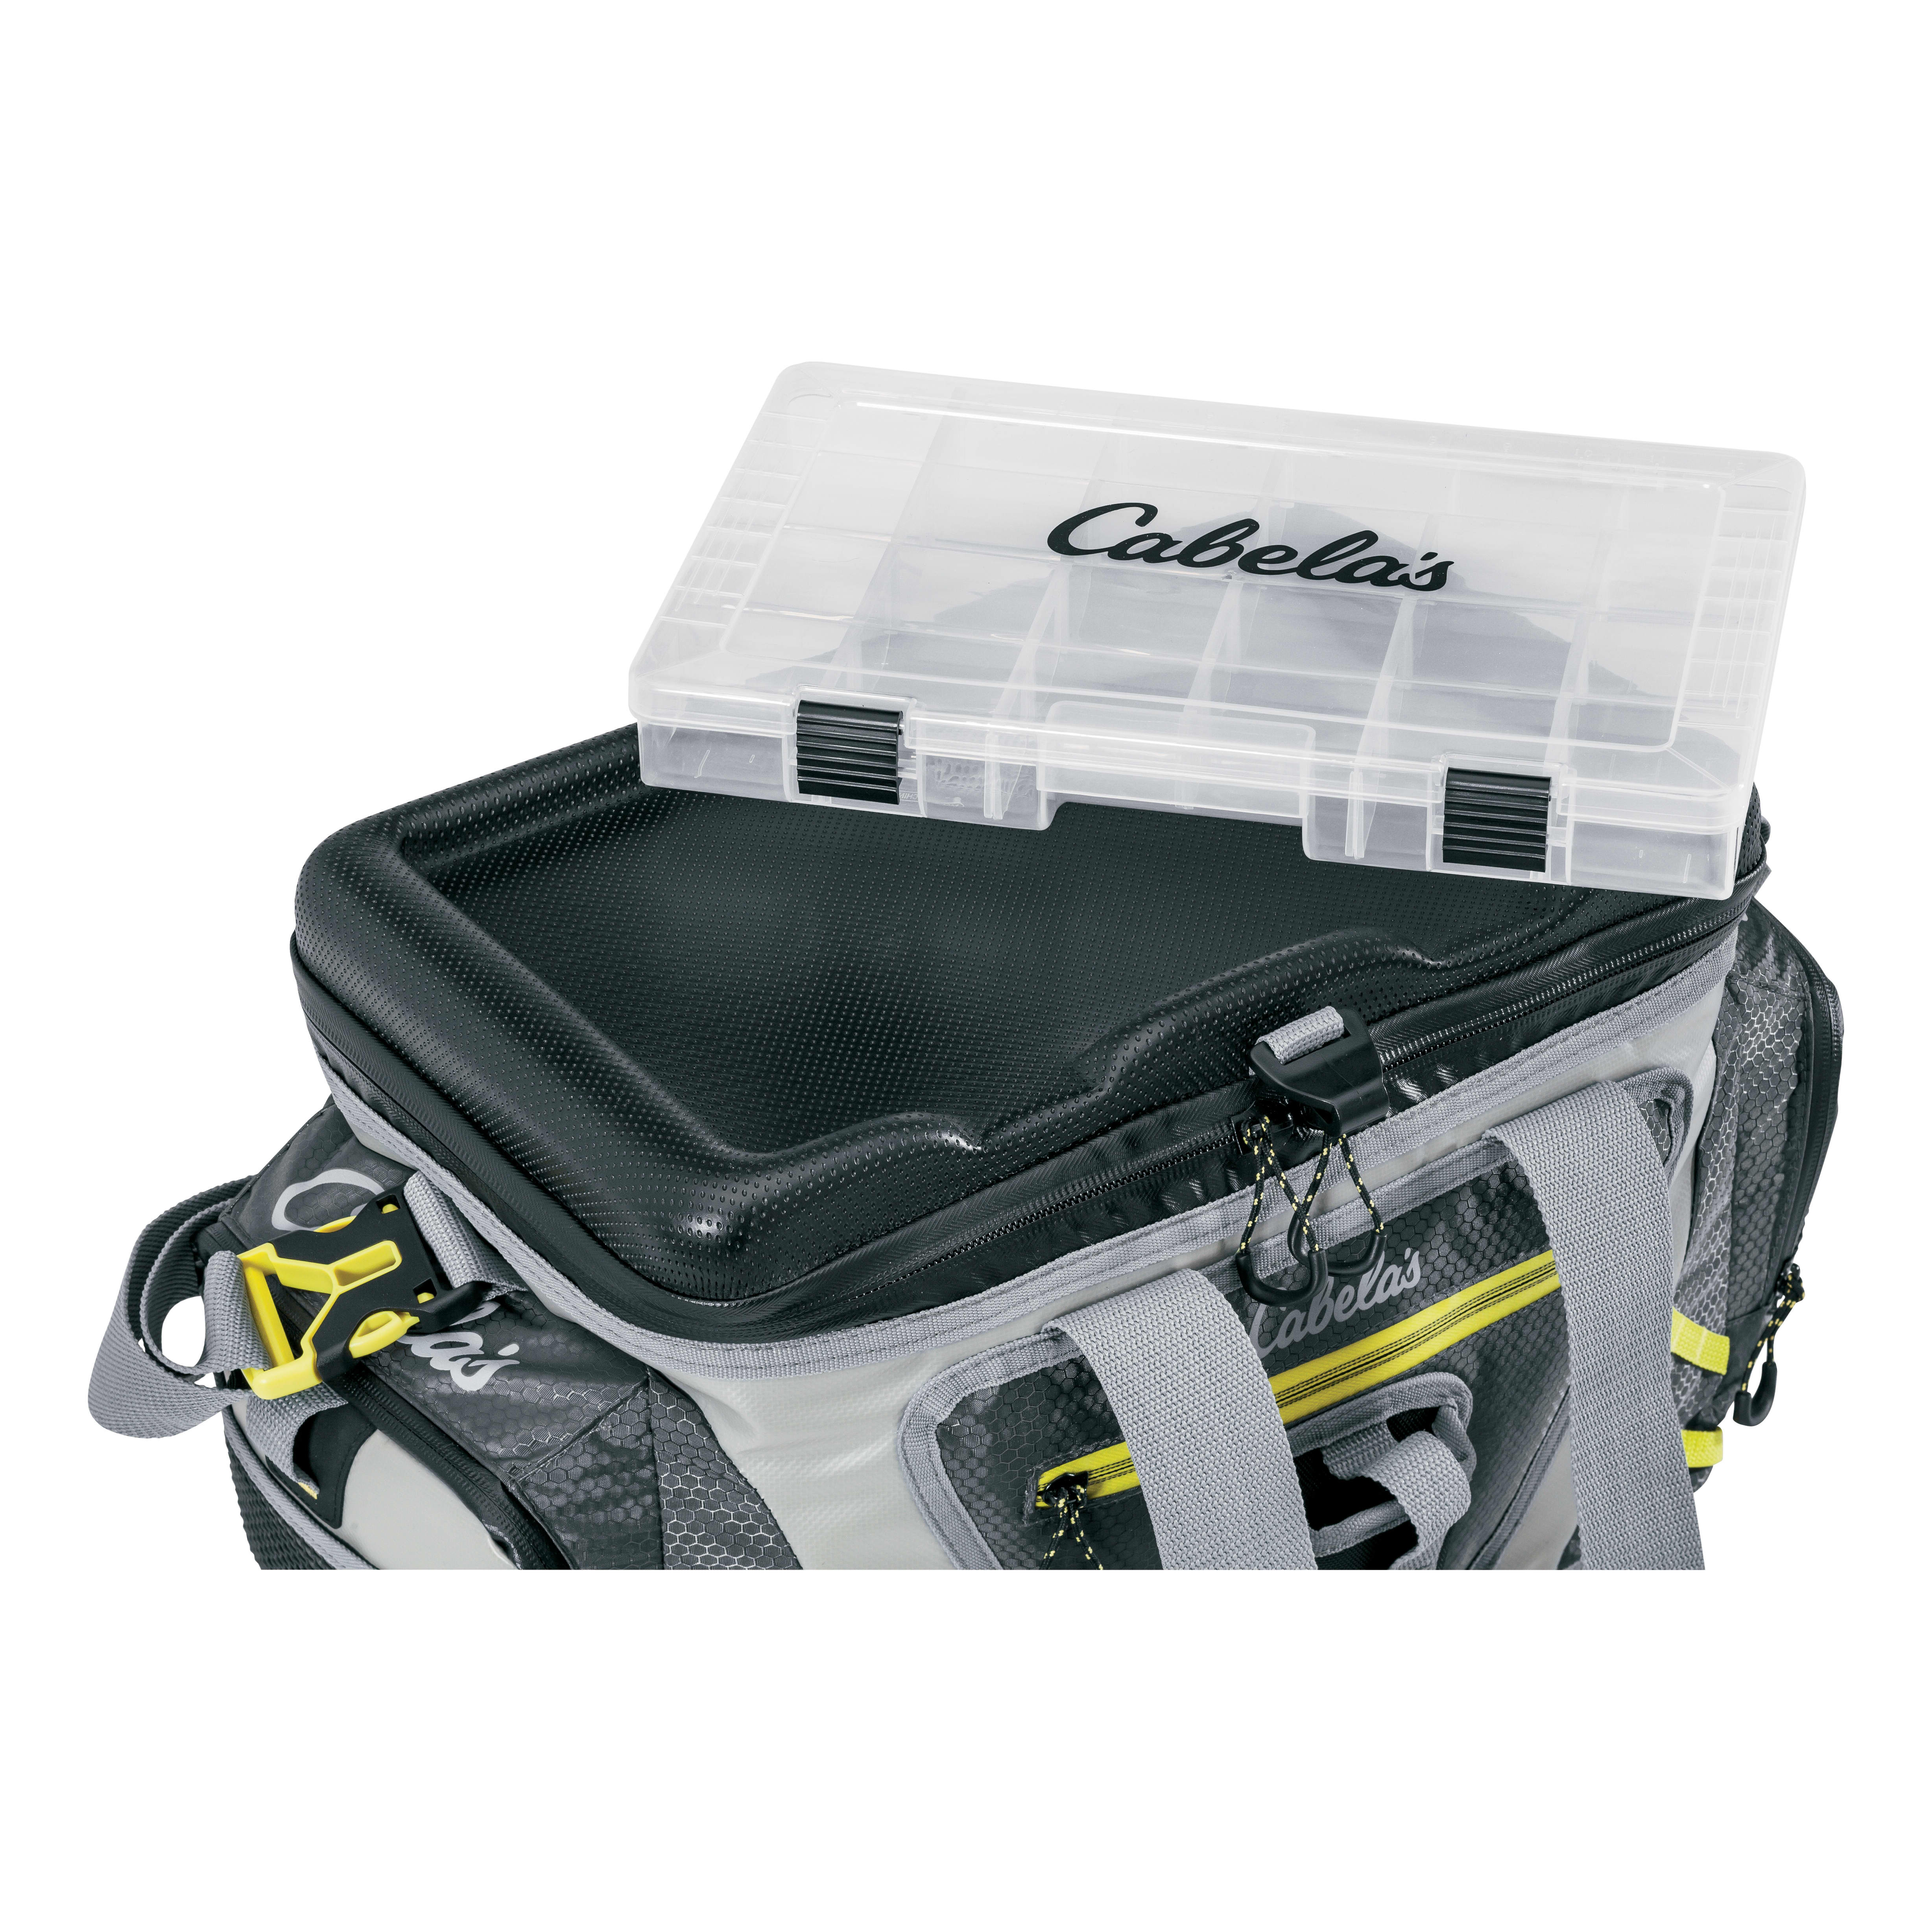 Cabela's Marine-Grade Tackle Bag with Utility Box - ProLatch Utility Box